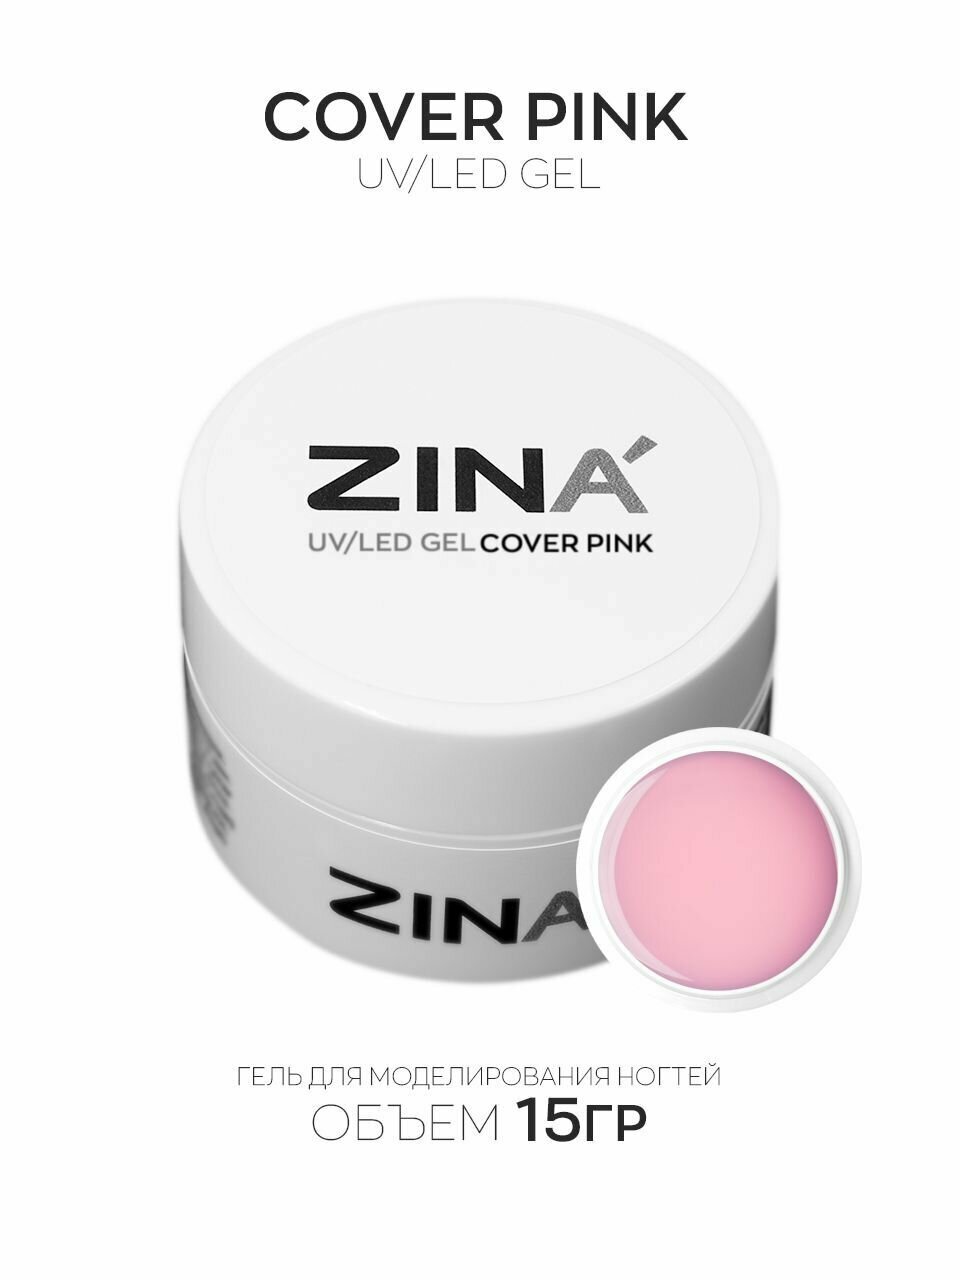 Гель камуфлирующий ZINA Cover Pink - 15 грамм, UV-LED гели